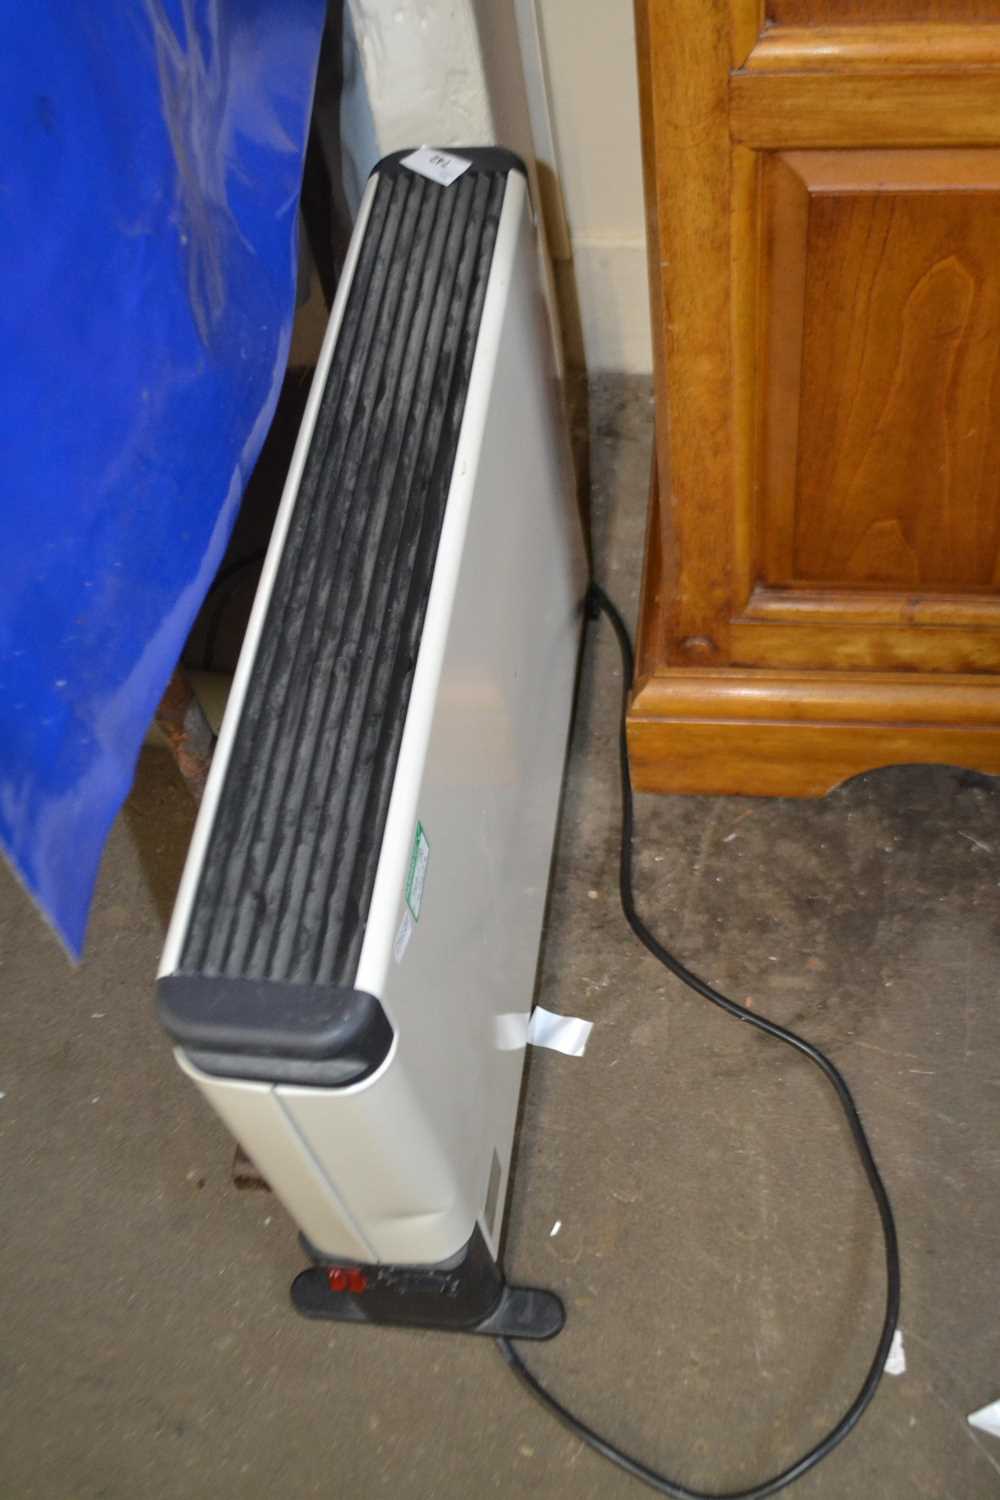 Delonghi freestanding electric heater